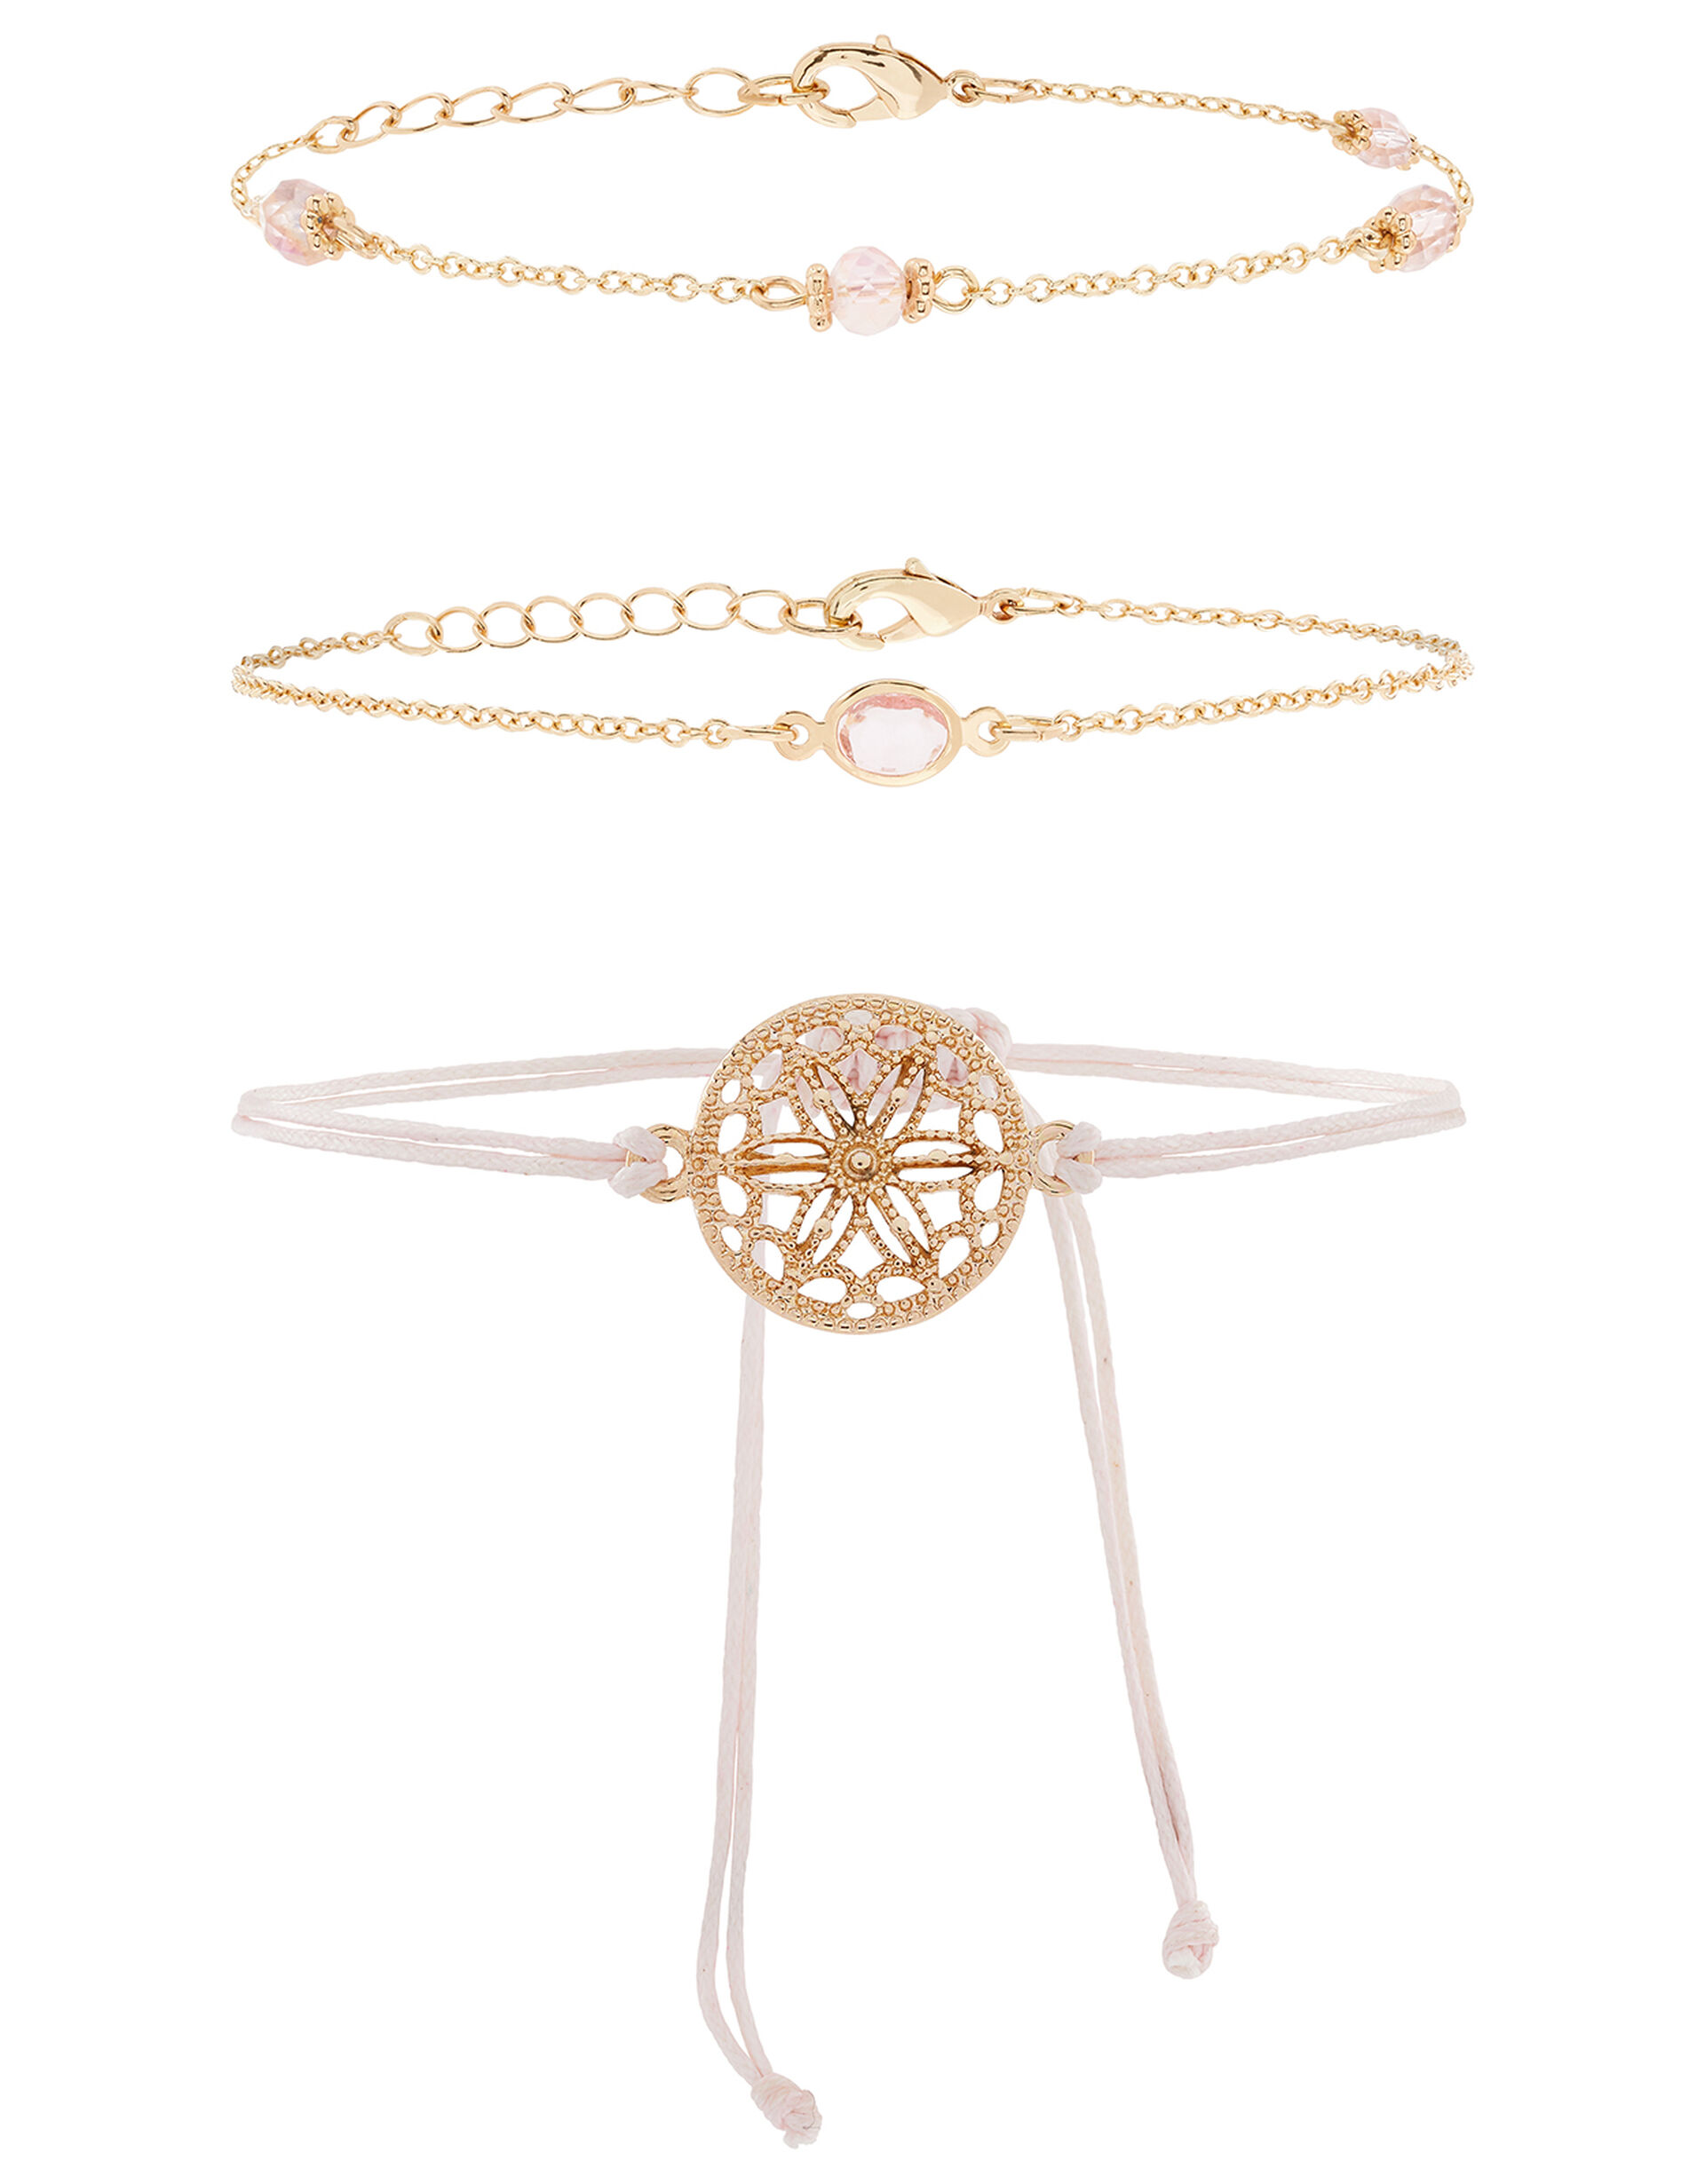 Gemstone Chain and Friendship Bracelet Set, , large